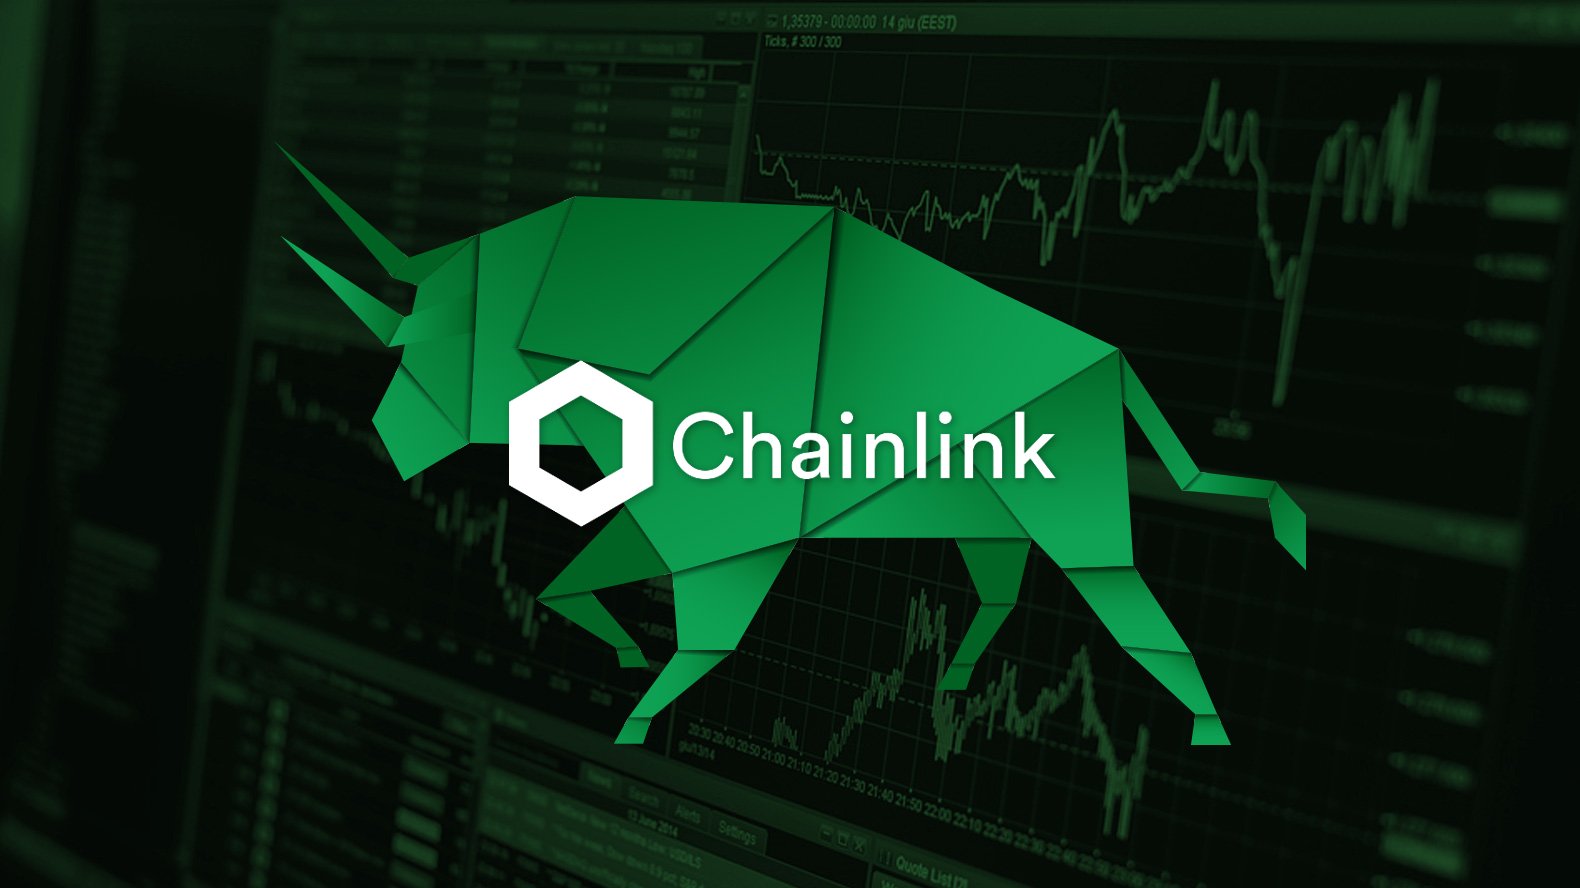 chainlink price analysis bullish - چین لینک احتمالا یک روند صعودی بی سابقه را تجربه خواهد کرد